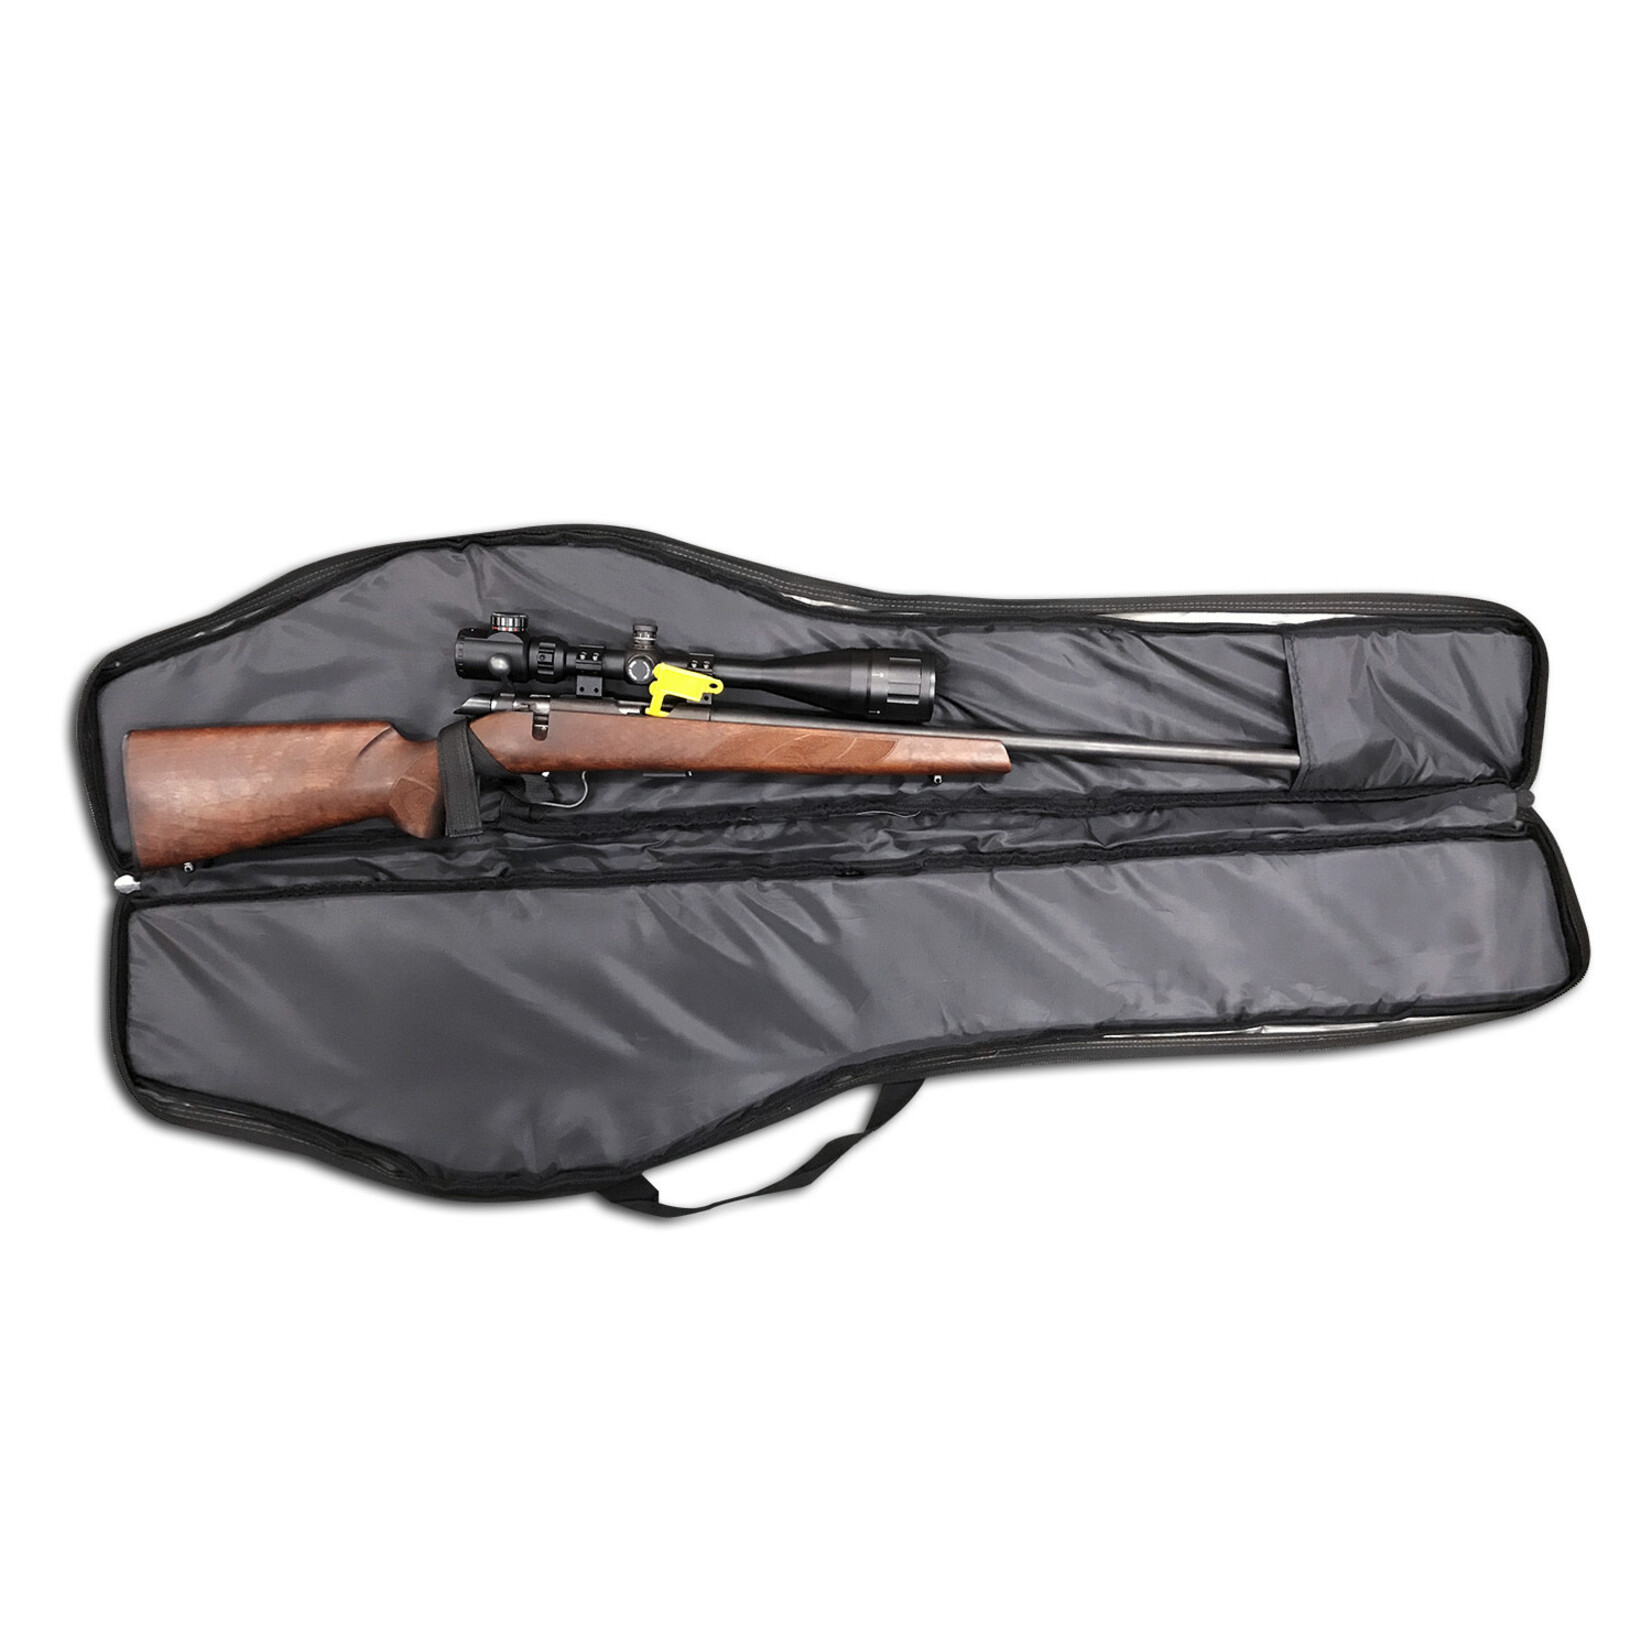 Epicshot EpicShot 48inch Rifle Gun Bag inc Backpack Straps